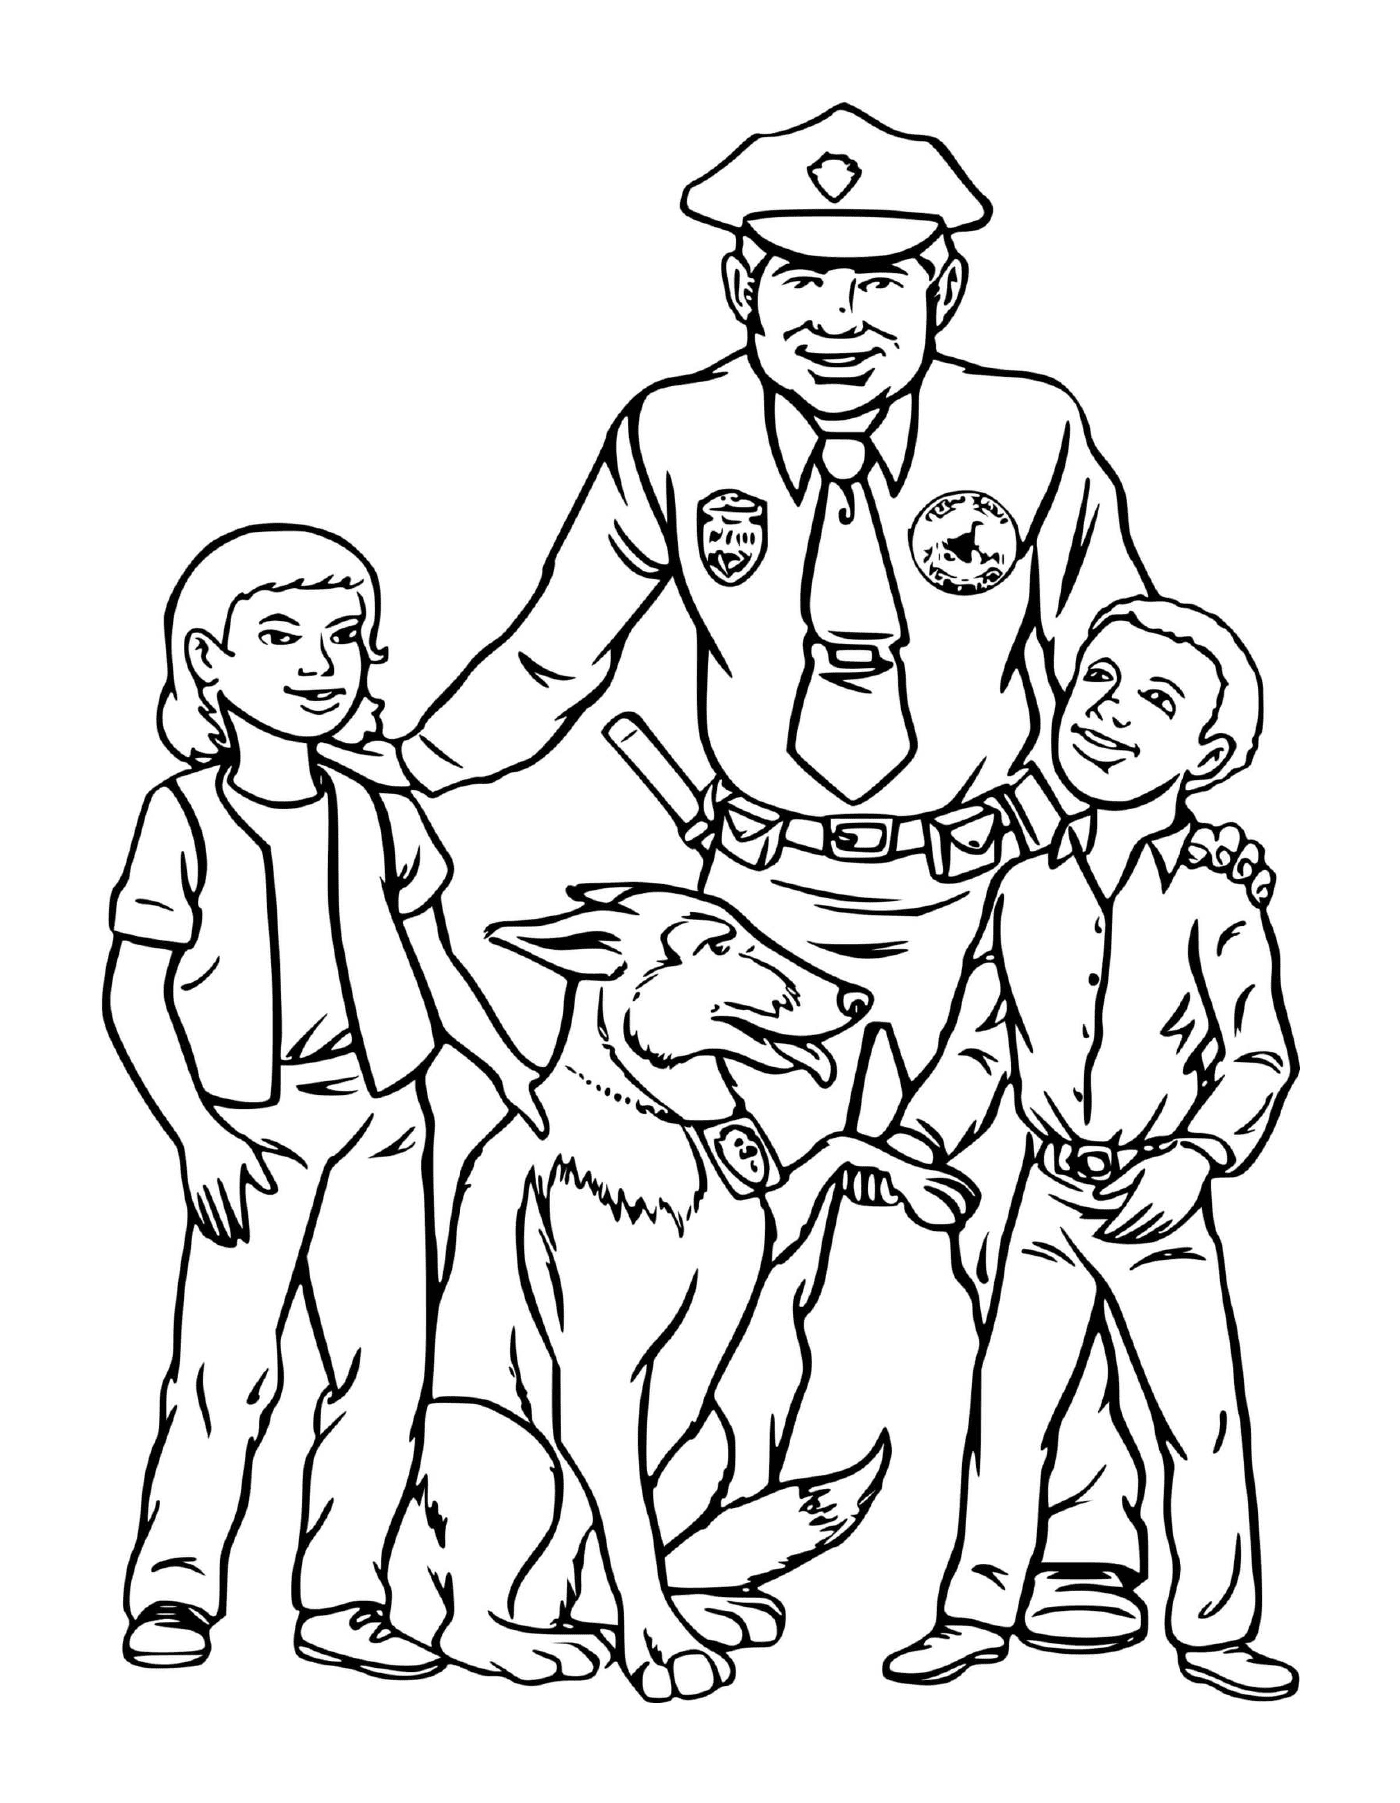  Polizist, Hund, Kinder anwesend 